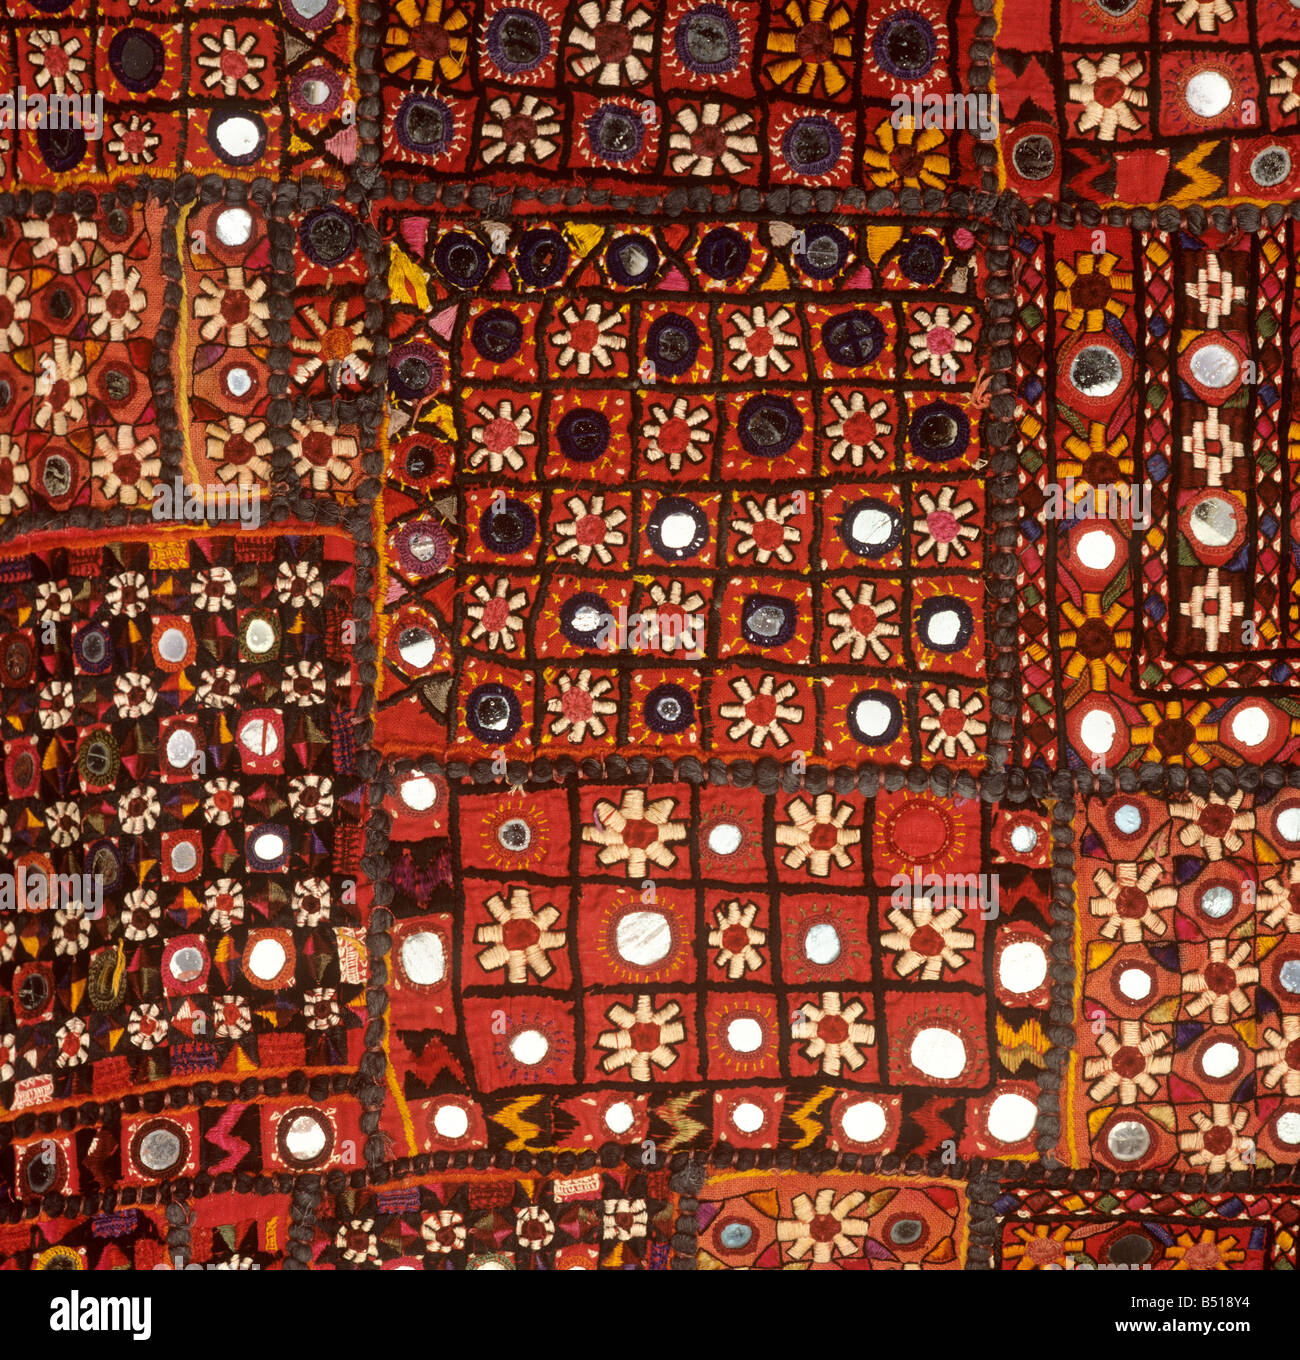 L'artisanat indien tissu patchwork travail miroir shisha Photo Stock - Alamy